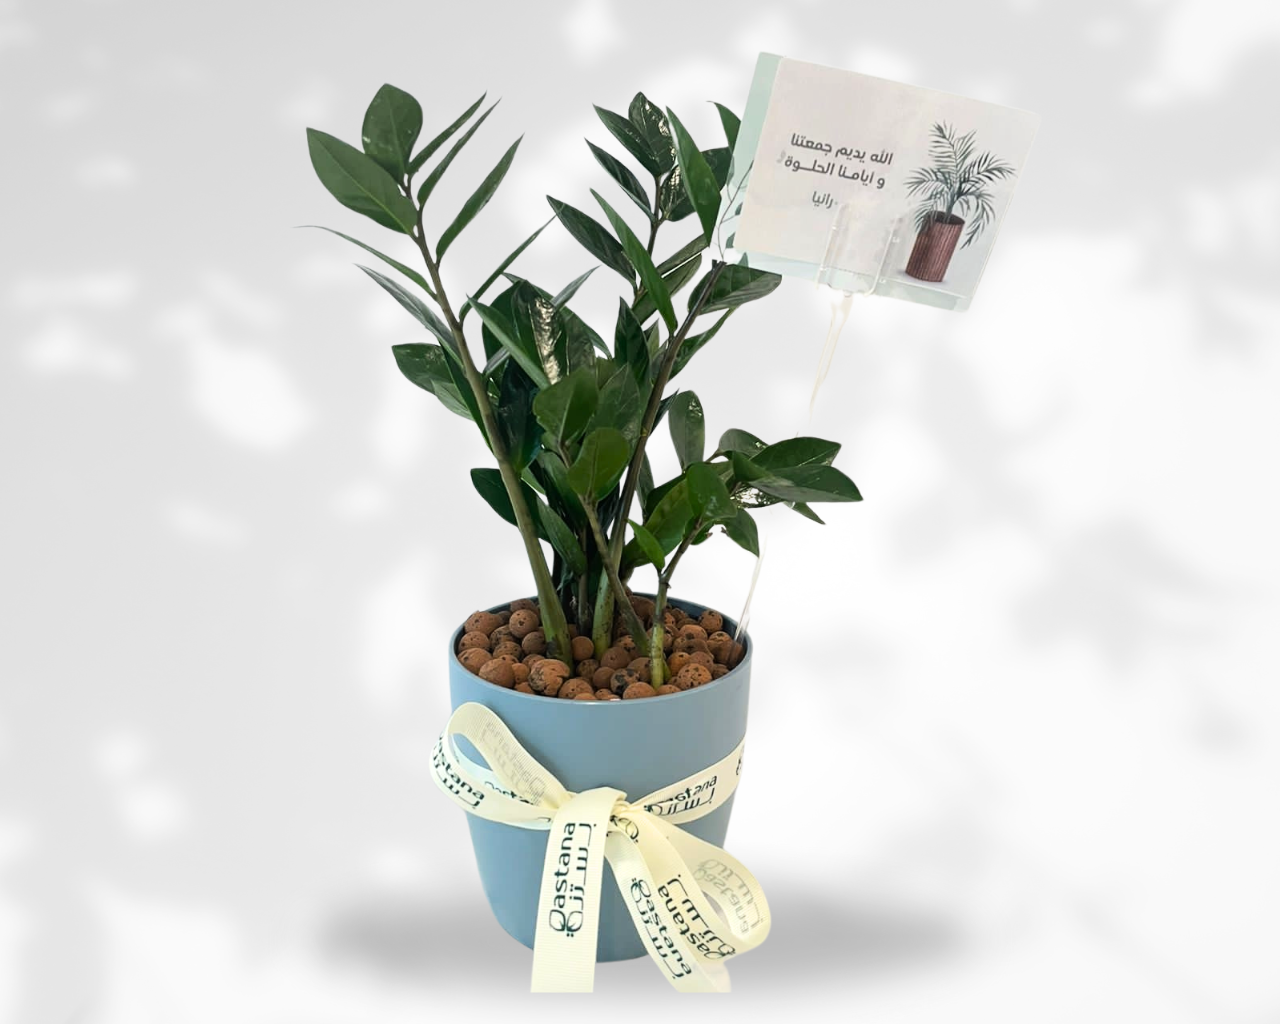 Zamia plant gift in blue pot